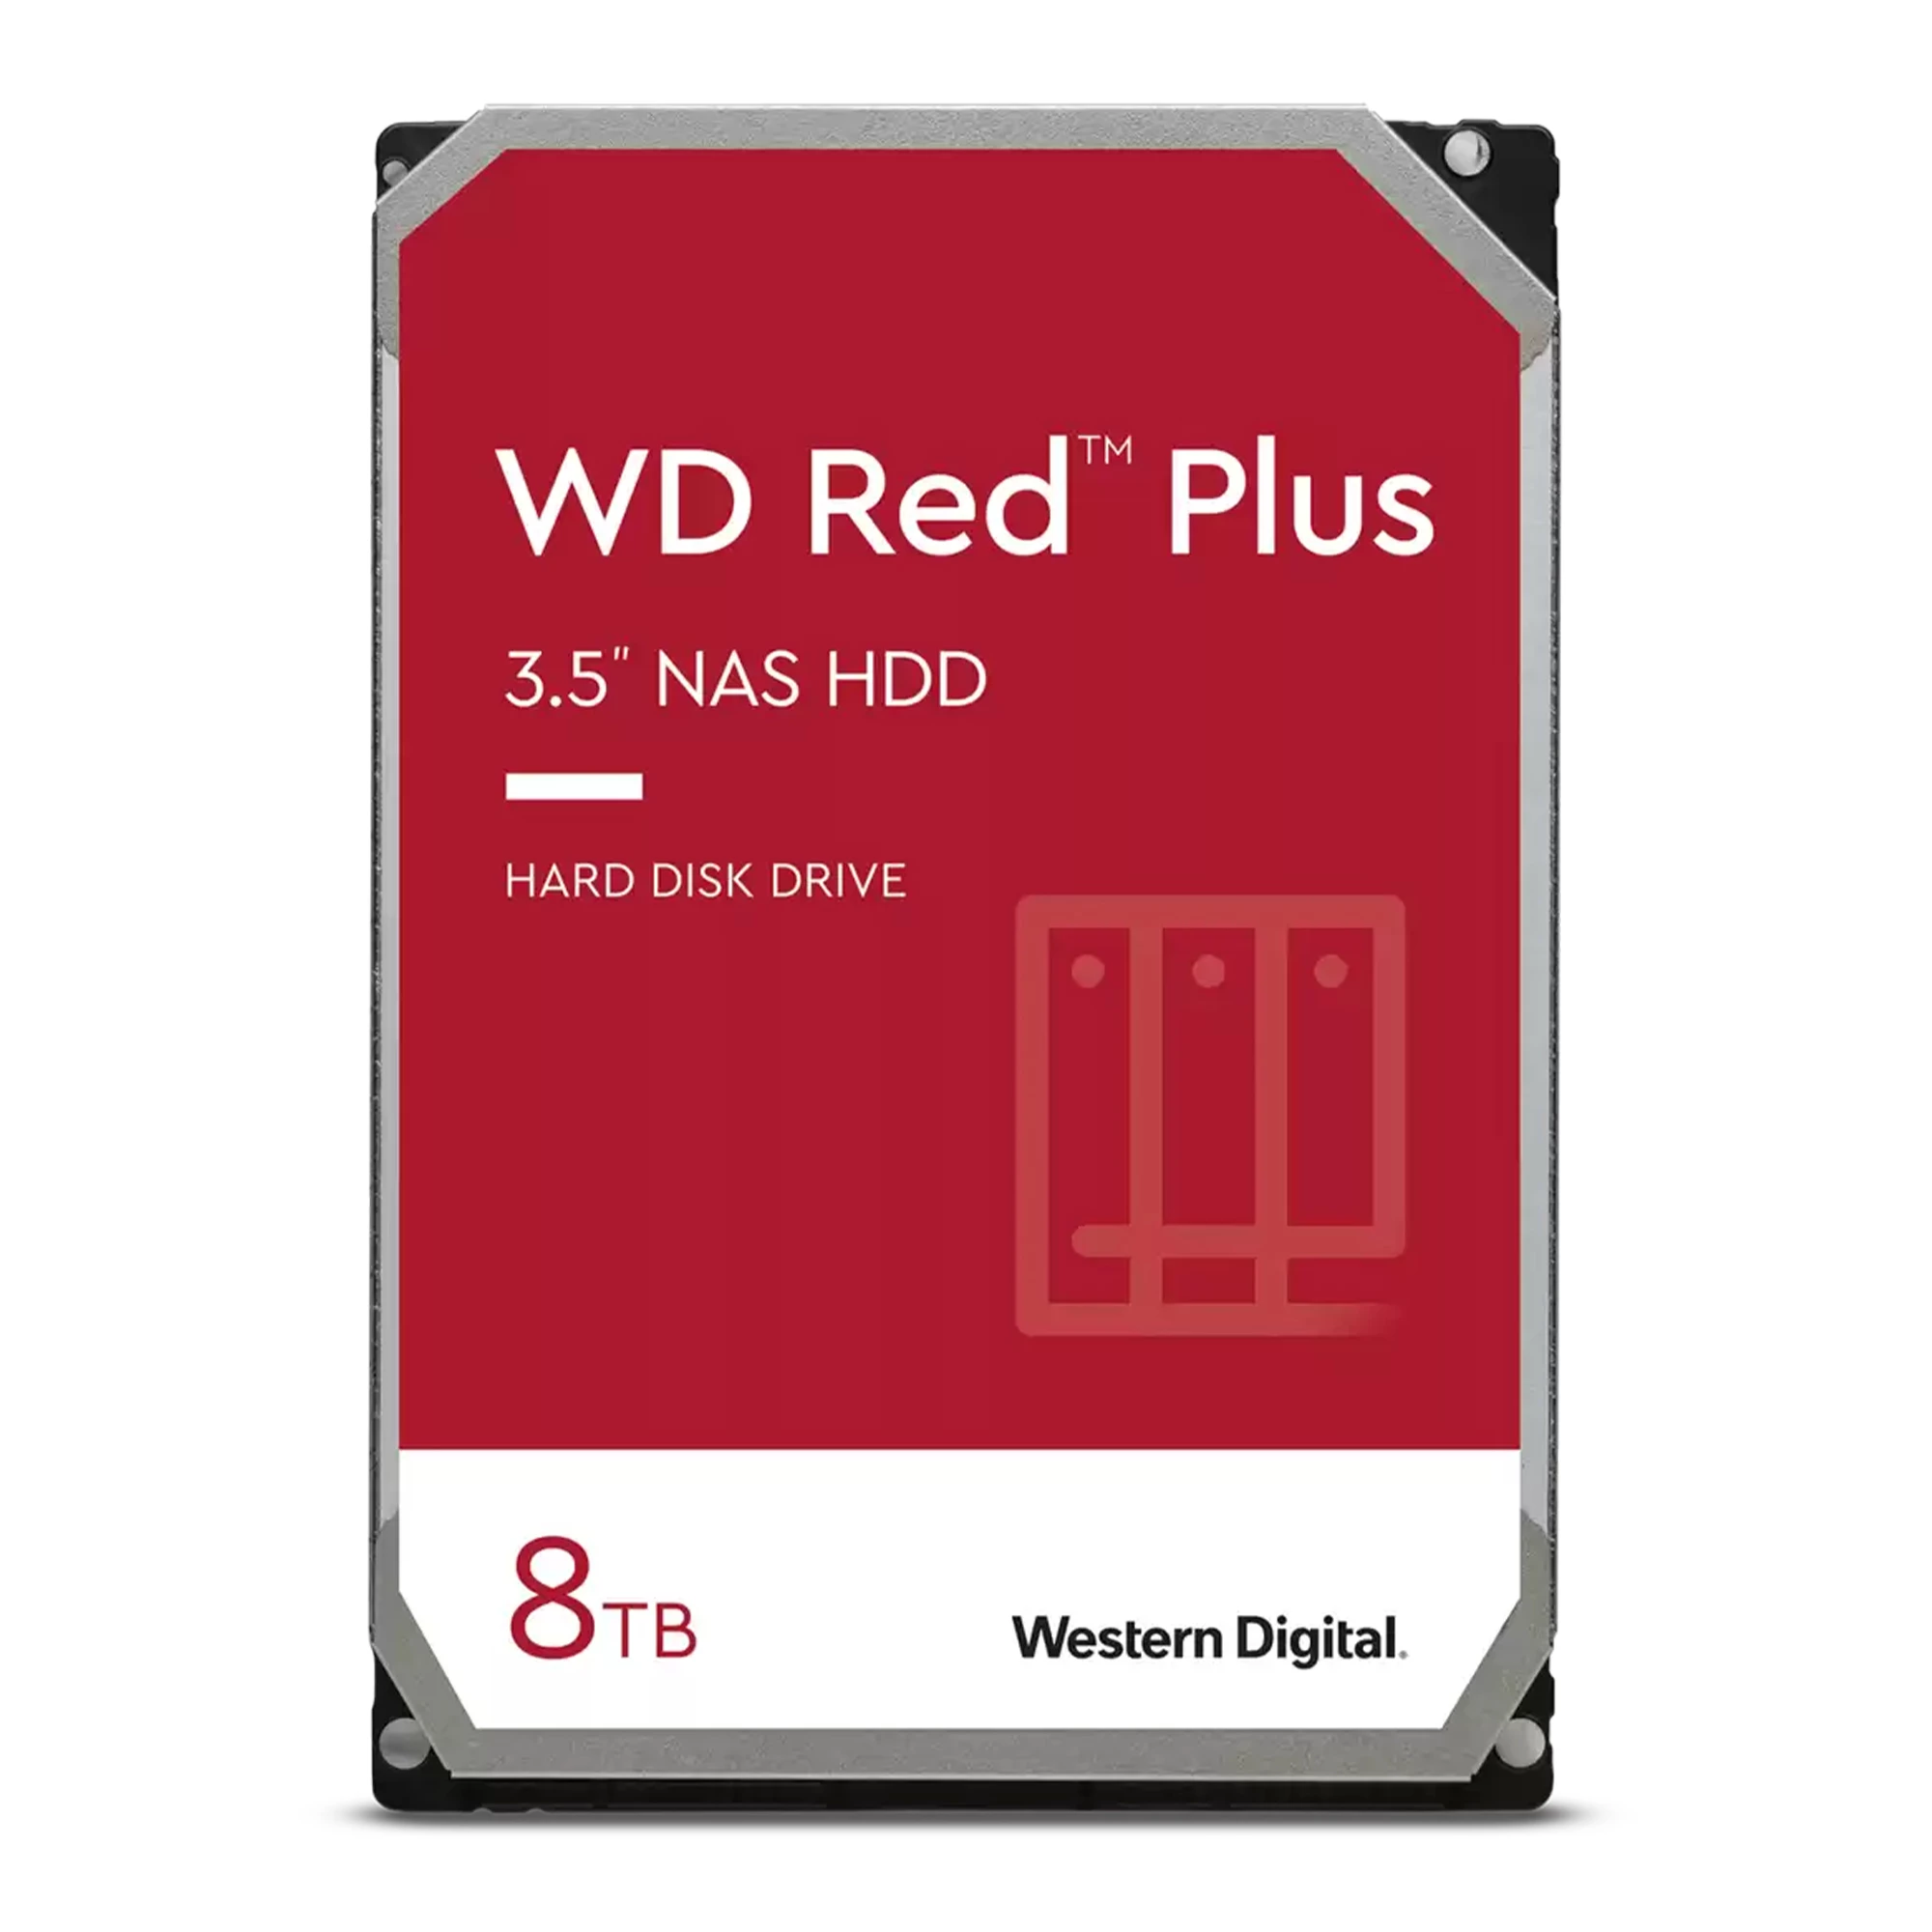 Жесткий диск WD Red Plus 8 TB (WD80EFBX)